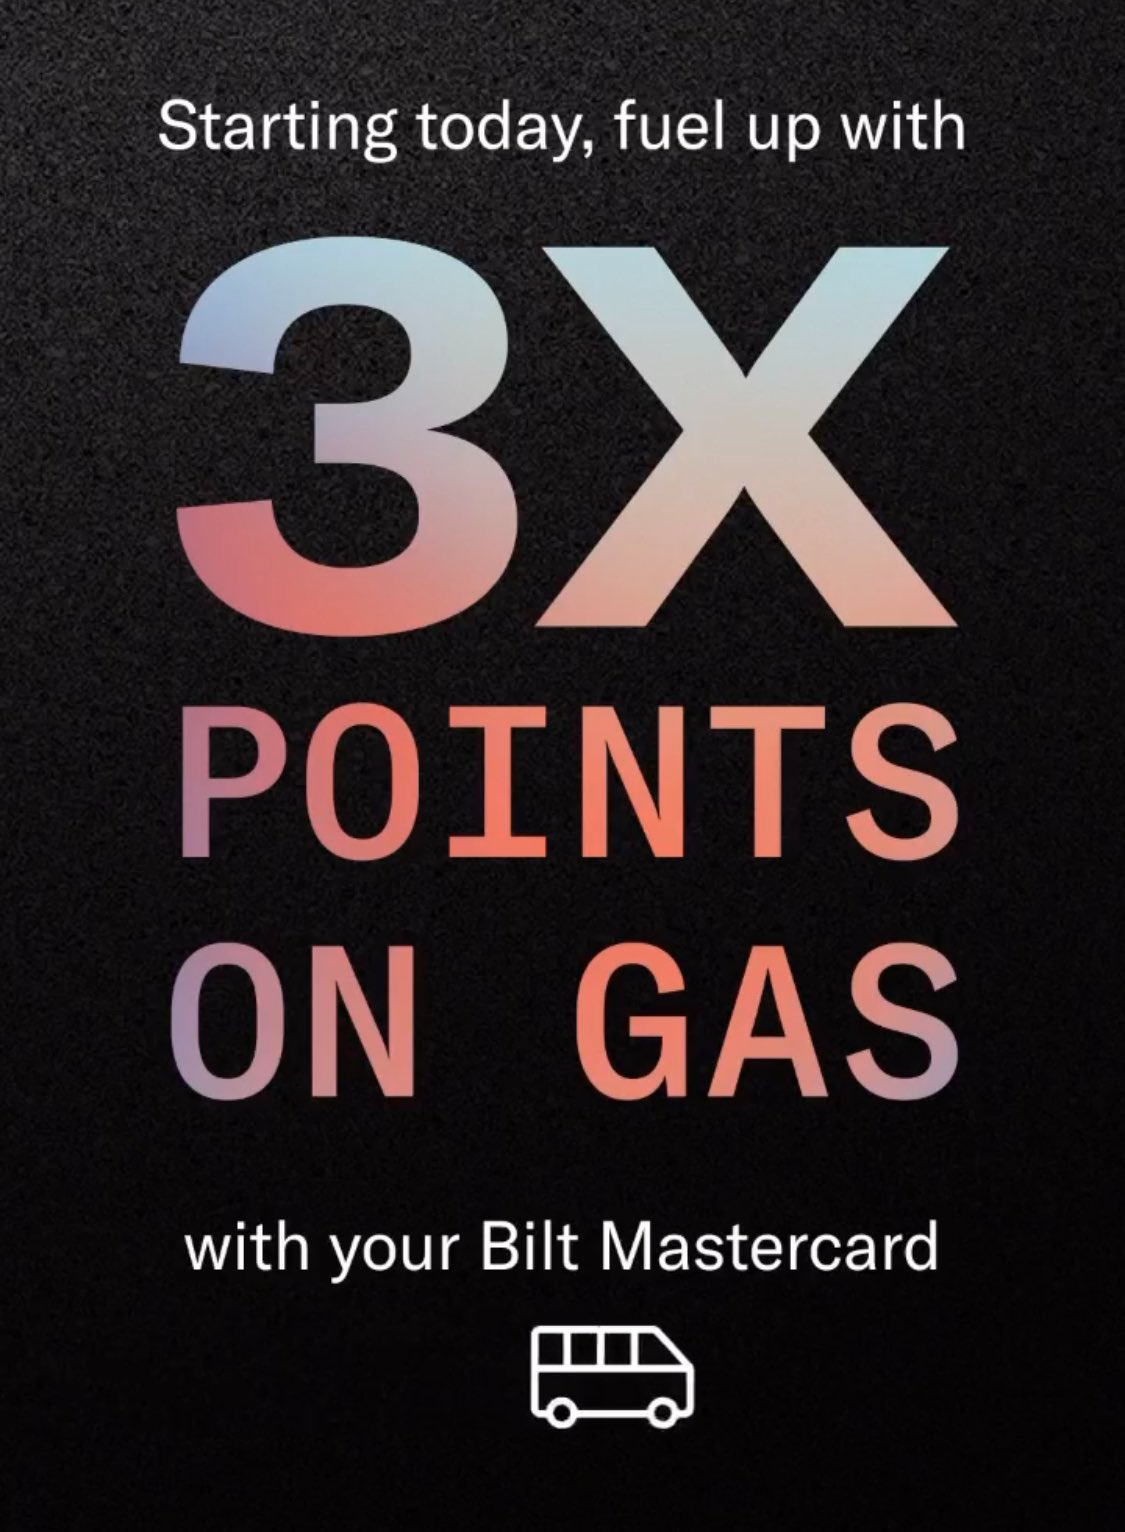 Bilt 3x Points on gas